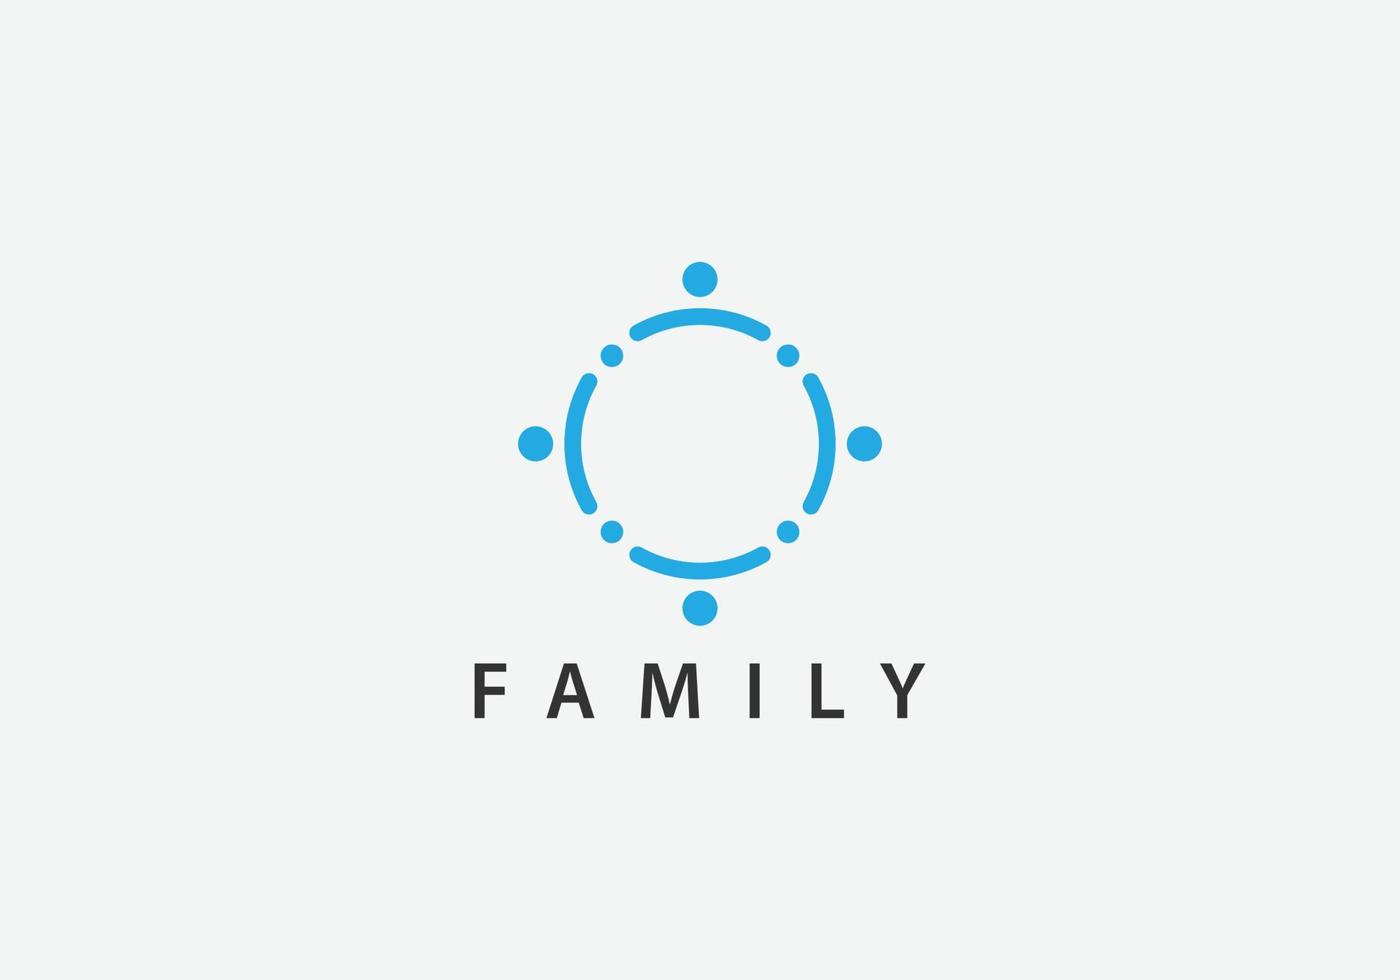 eps10 vektor familj eller gemenskap logotyp element mall isolerat på grå bakgrund